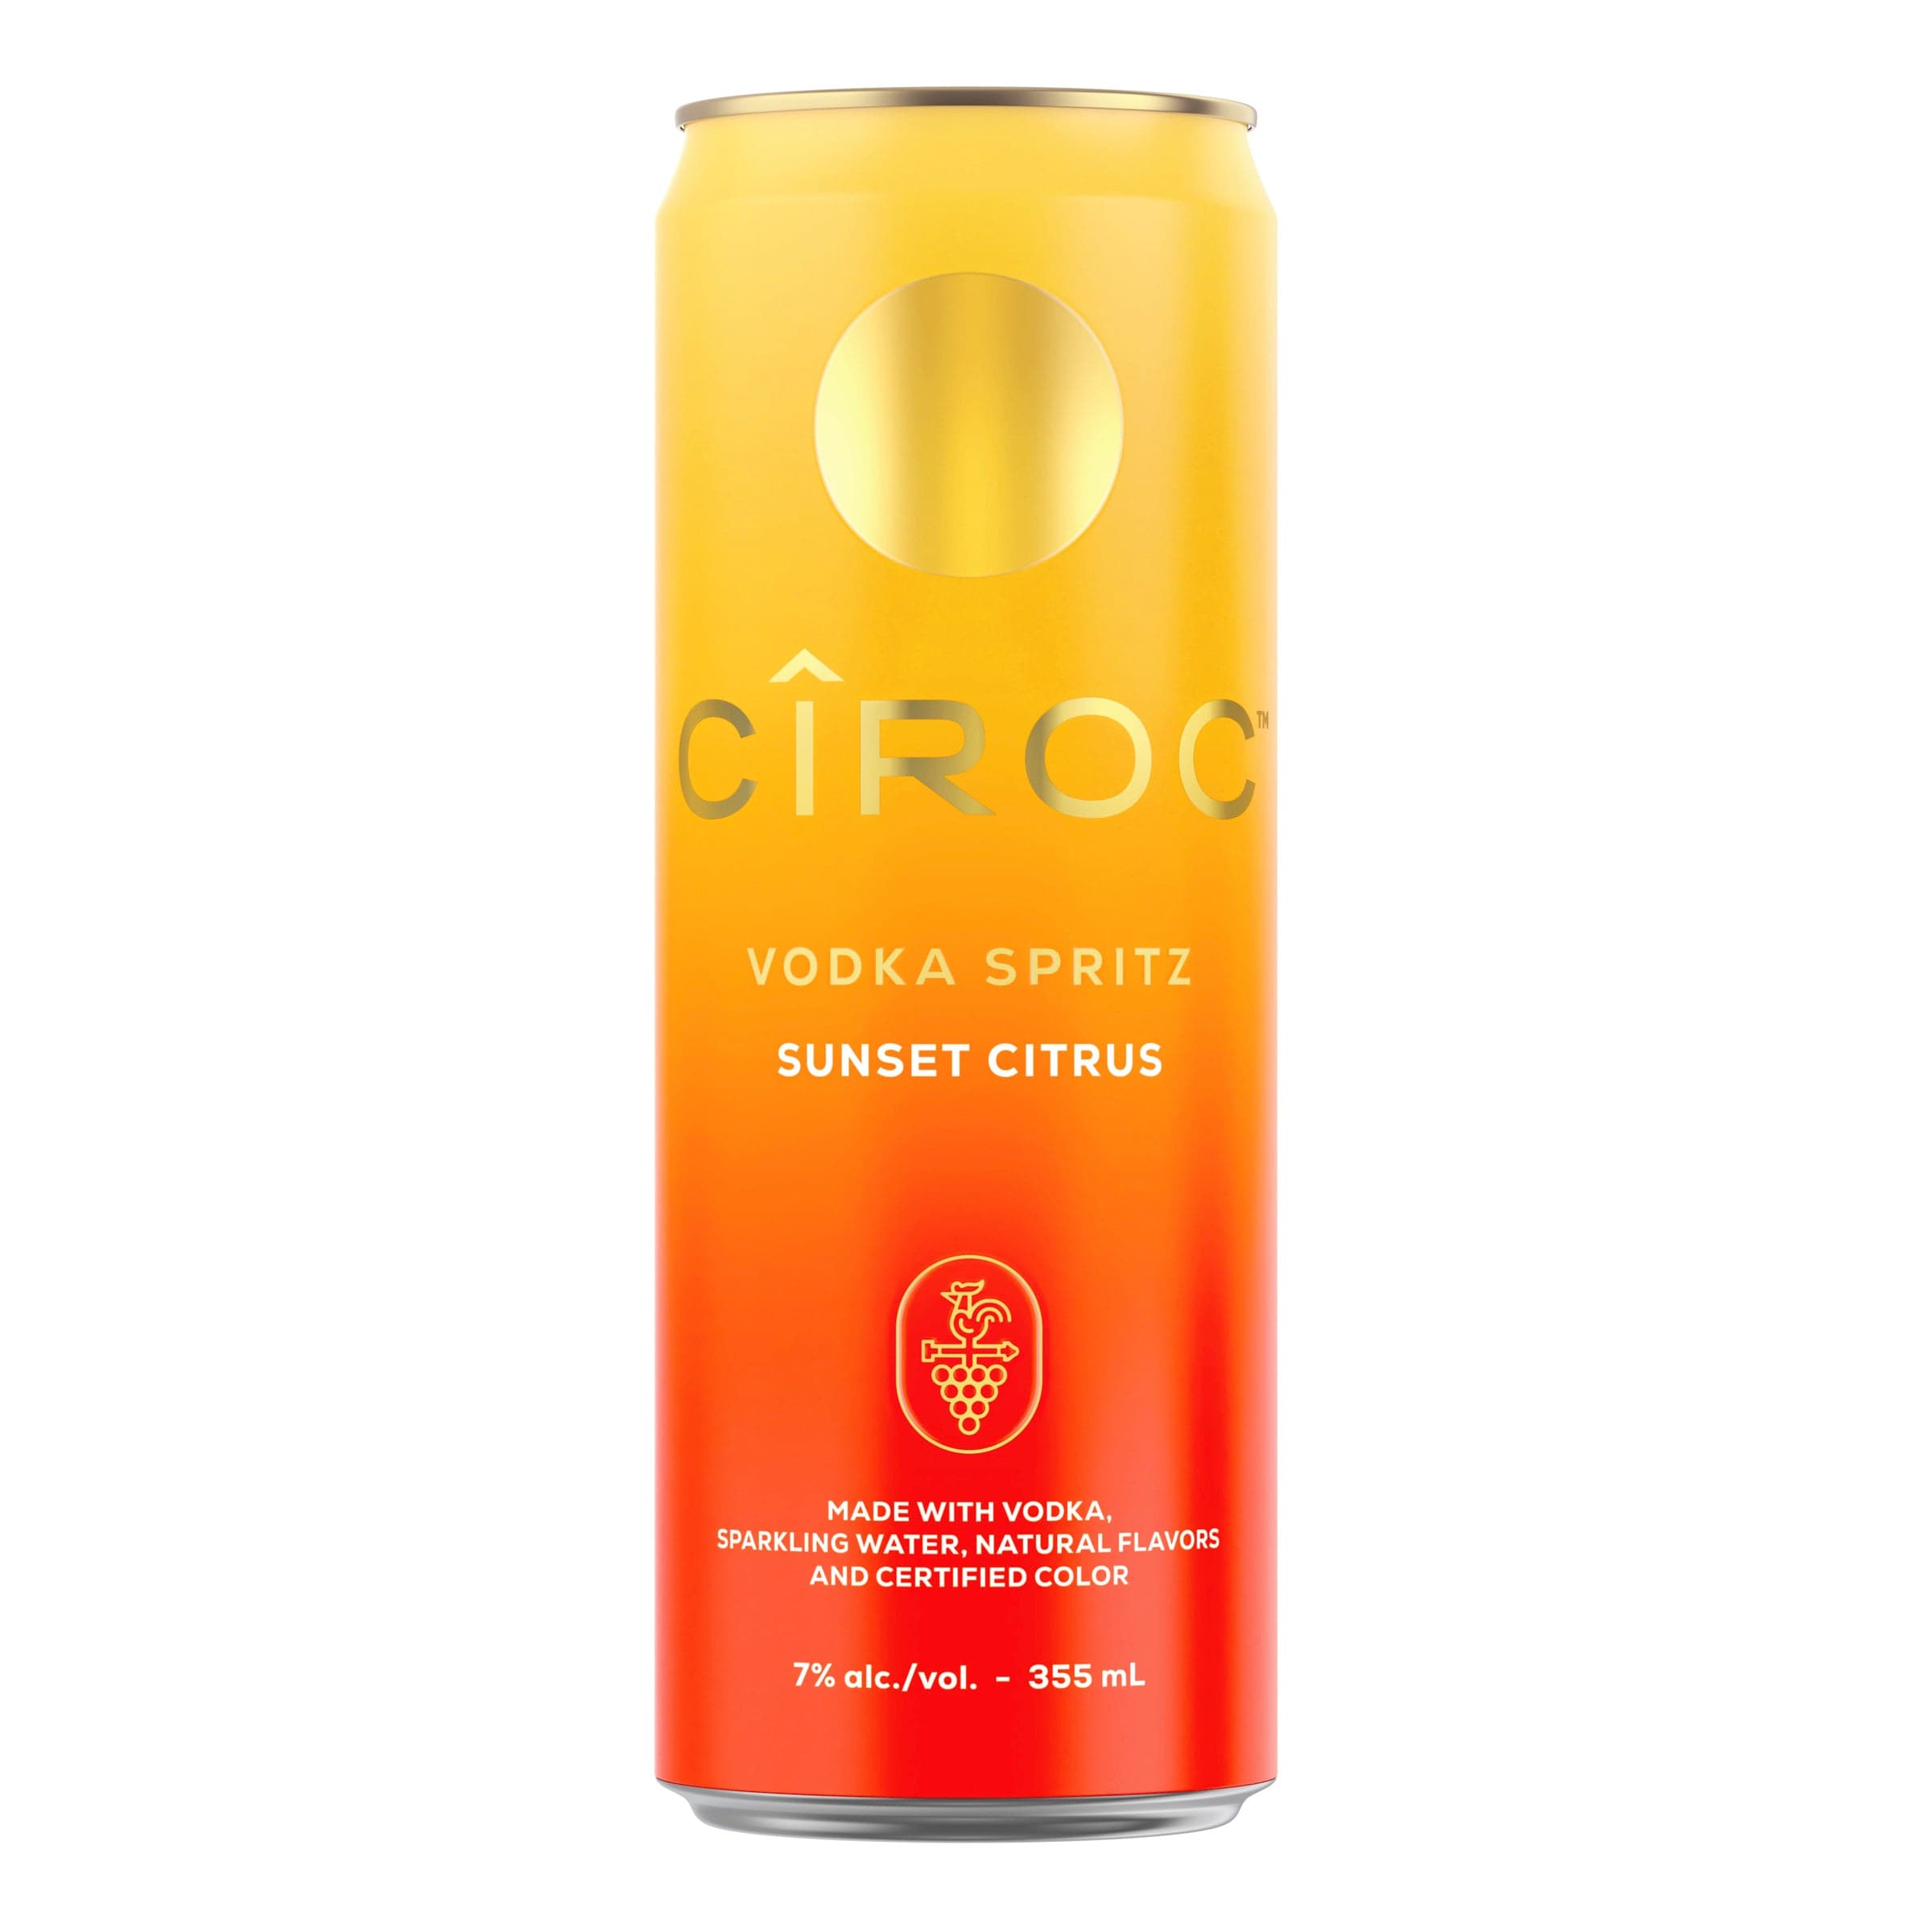 Ciroc Vodka Sunset Citrus Spritz 4x 355ml Cans - Barbank